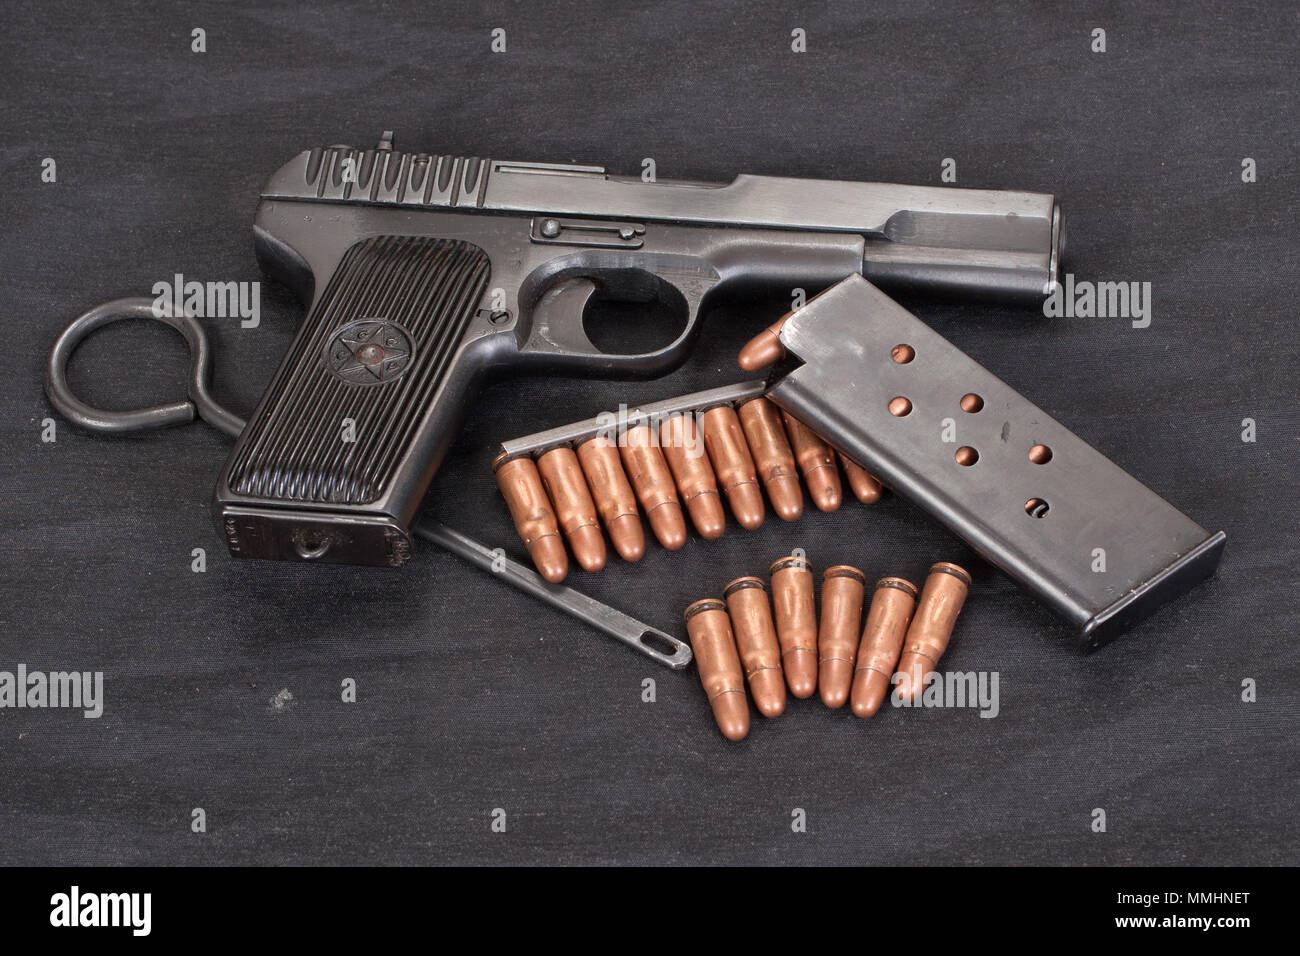 handgun on black background Stock Photo